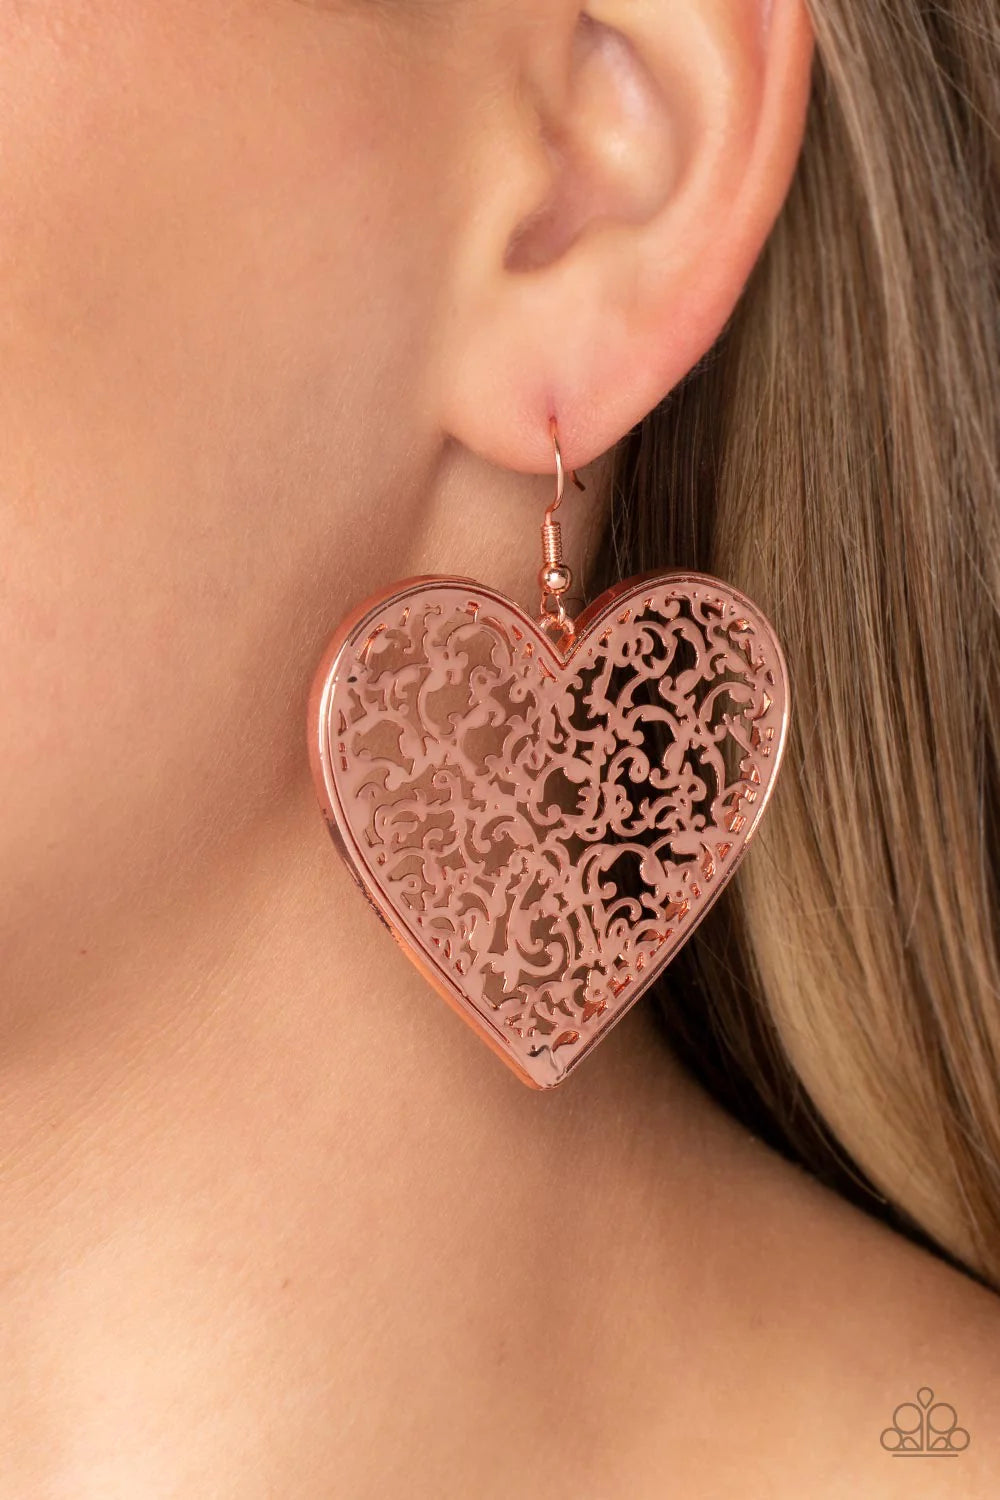 Paparazzi Fairest in the Land - Copper earrings